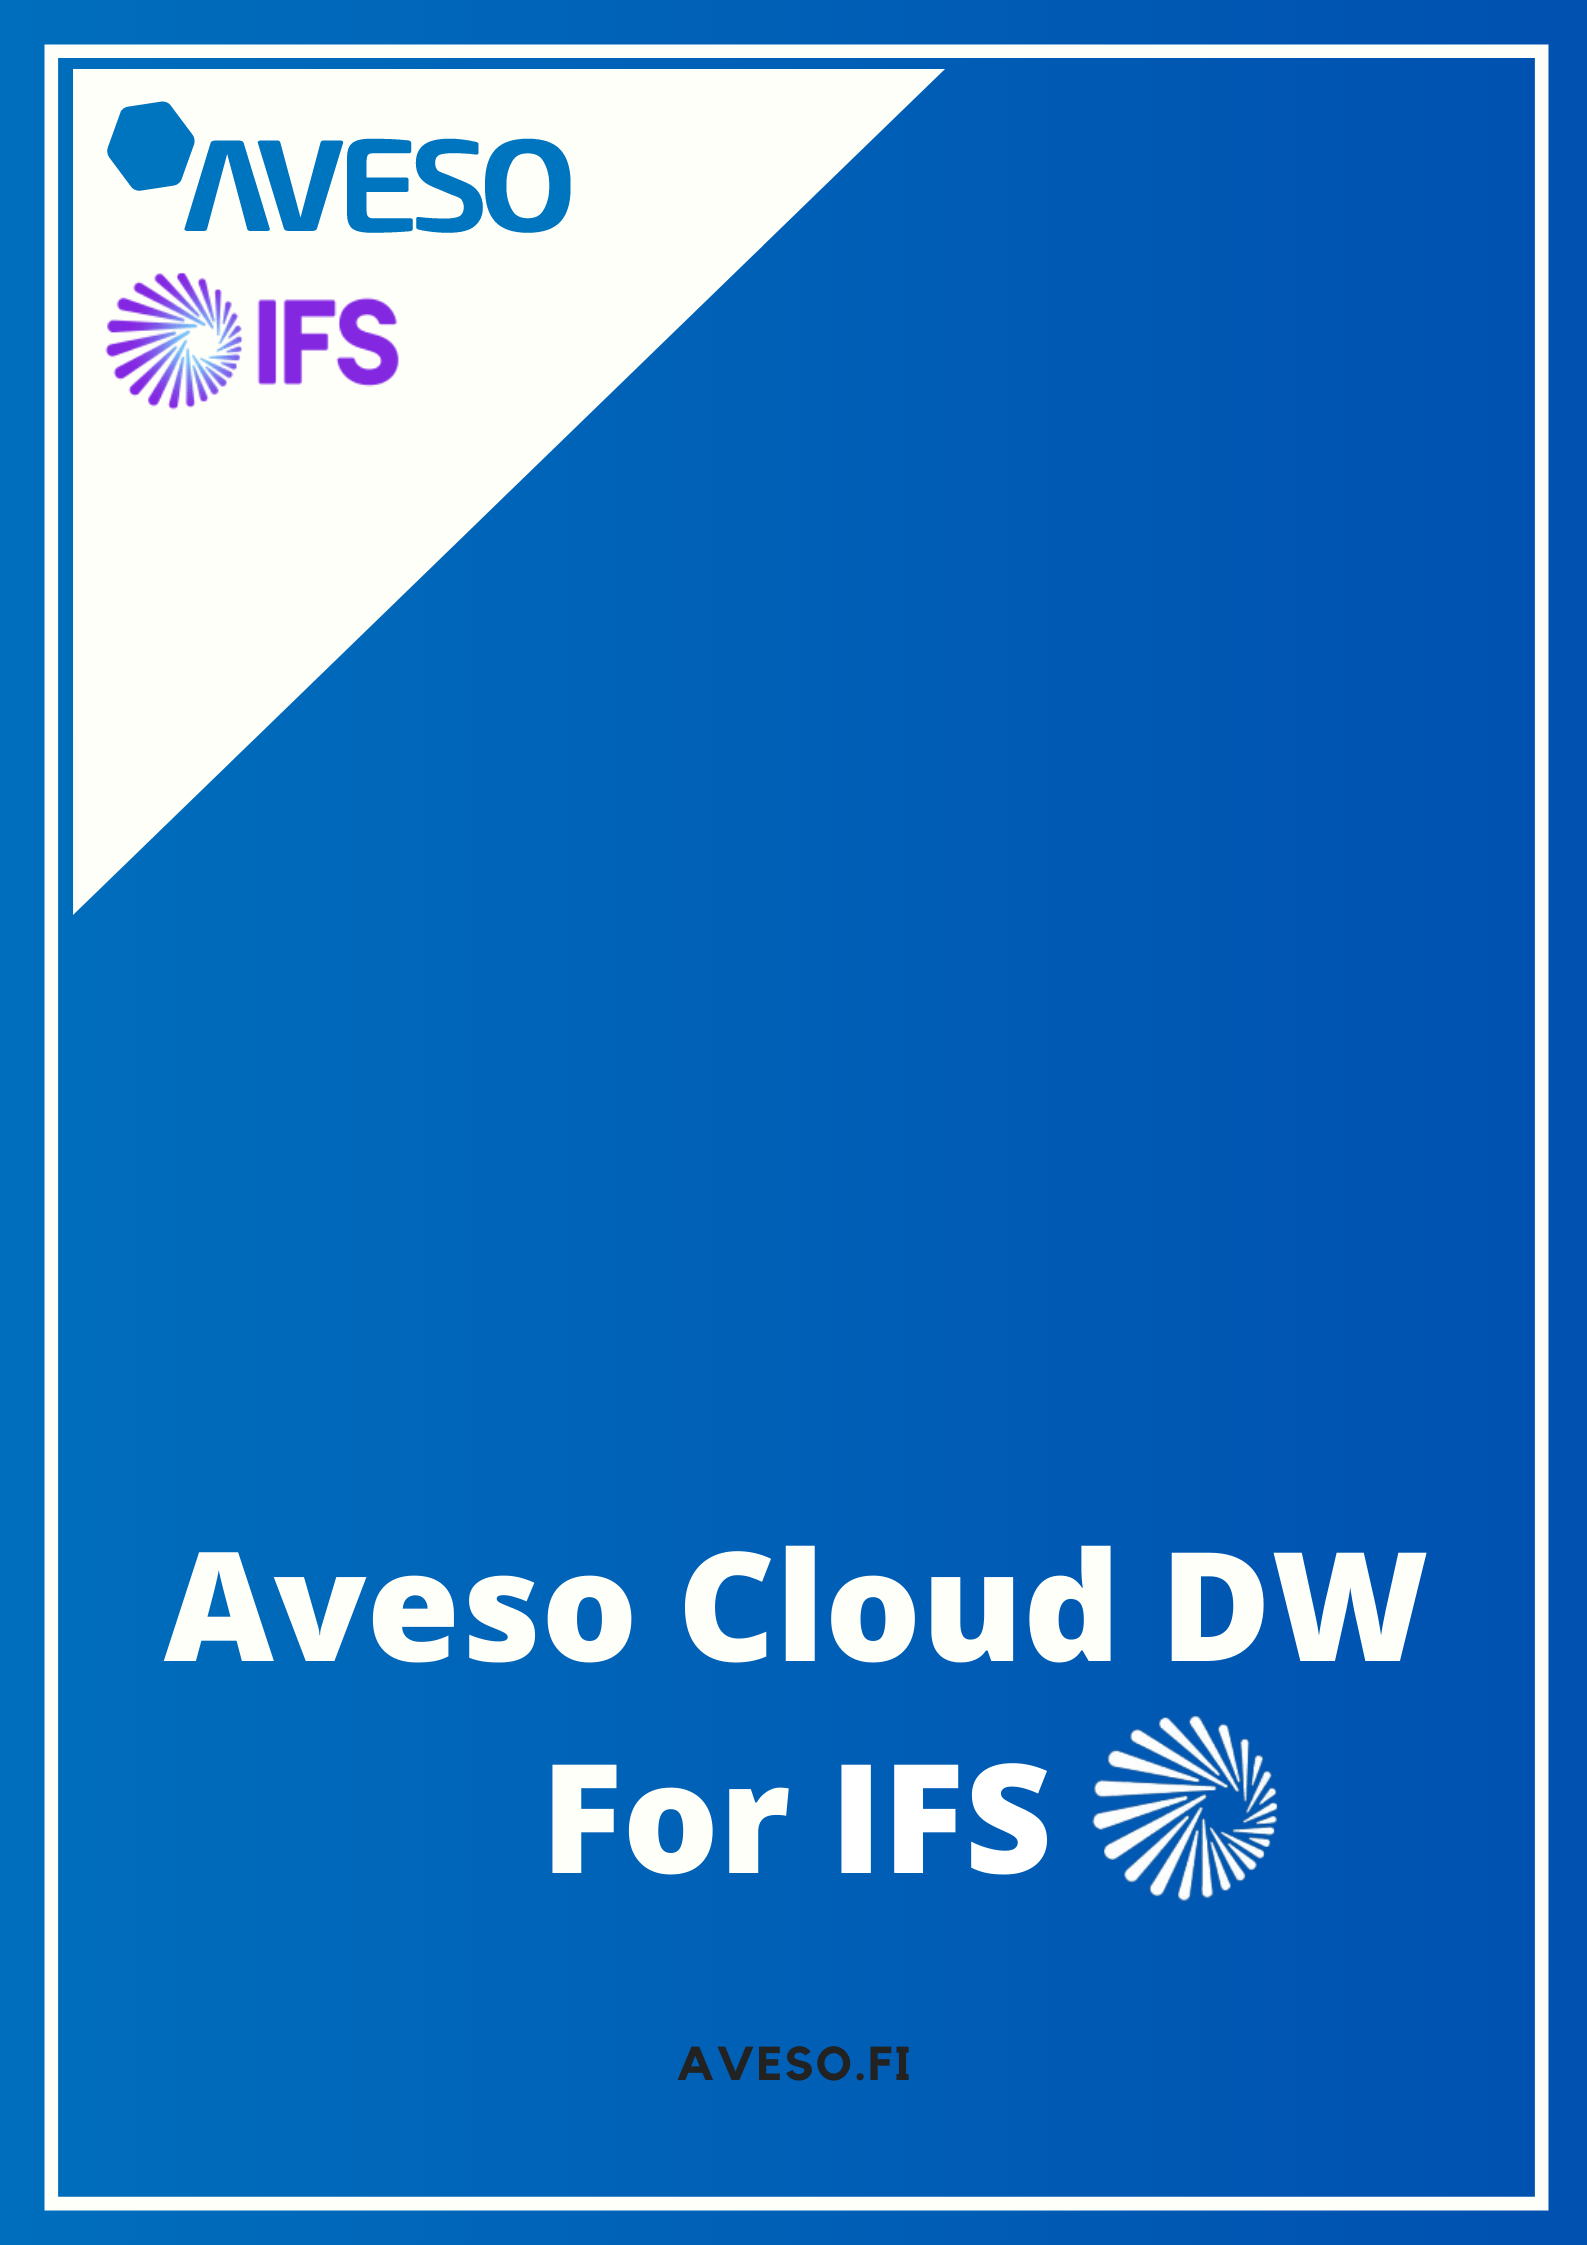 Aveso Cloud DW for IFS brochure